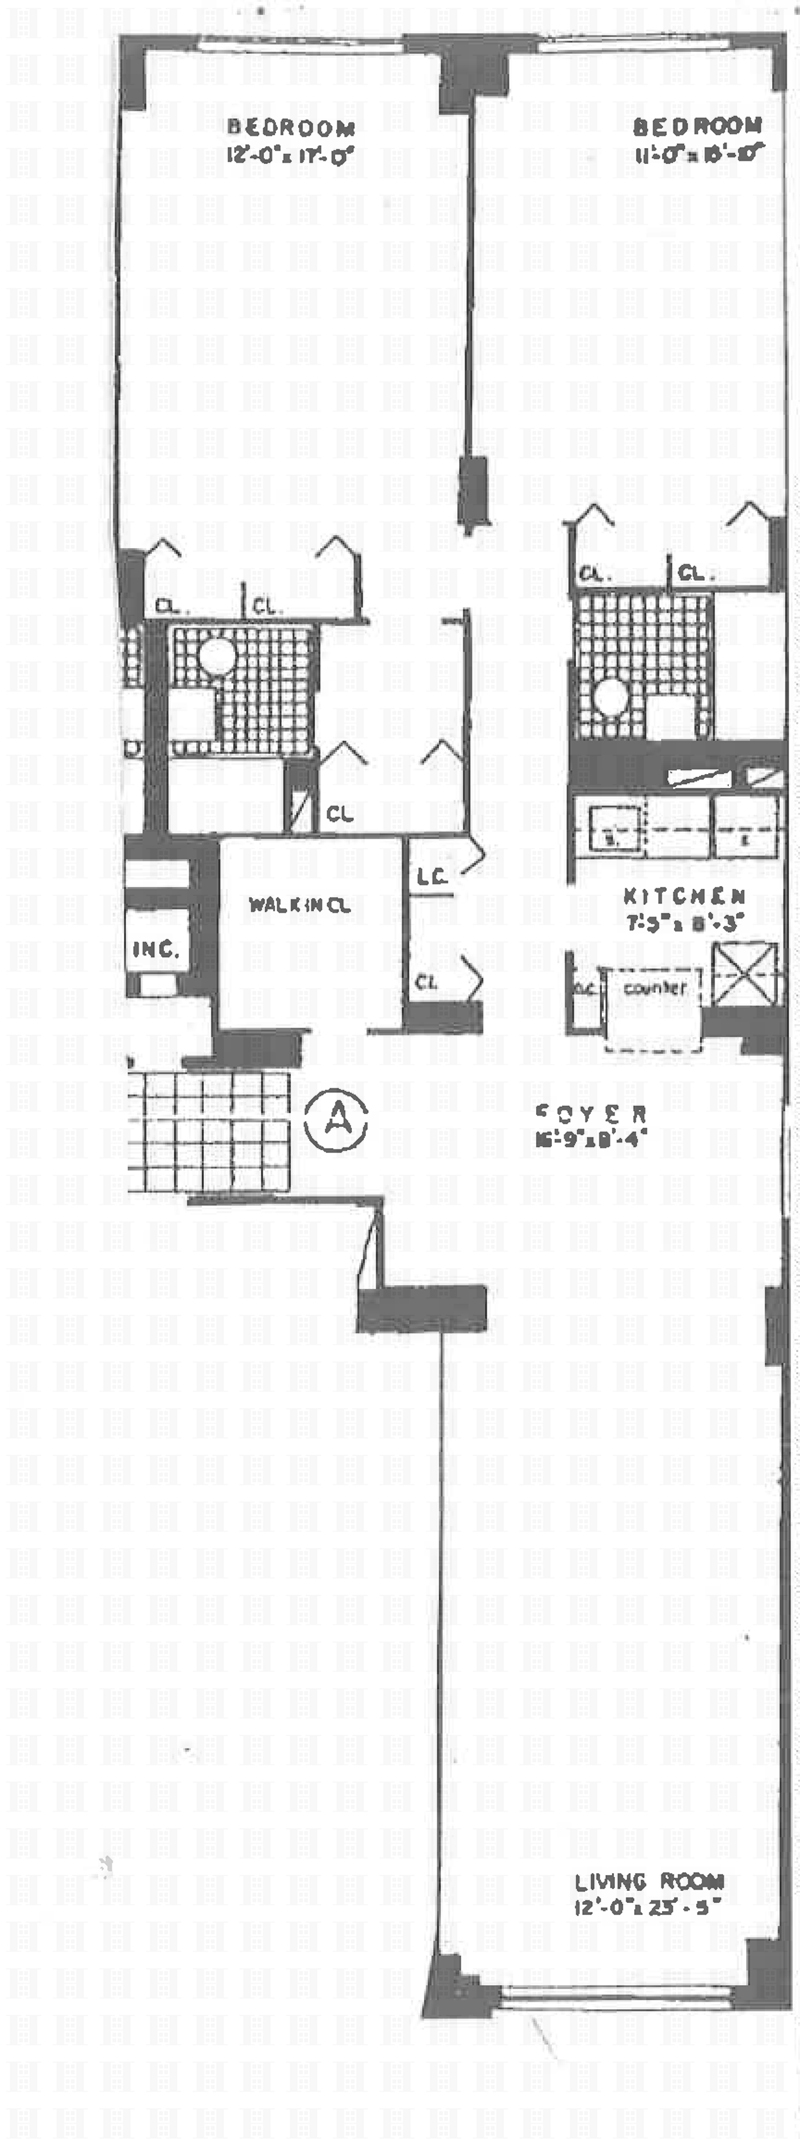 Floorplan for 60 West 13th Street